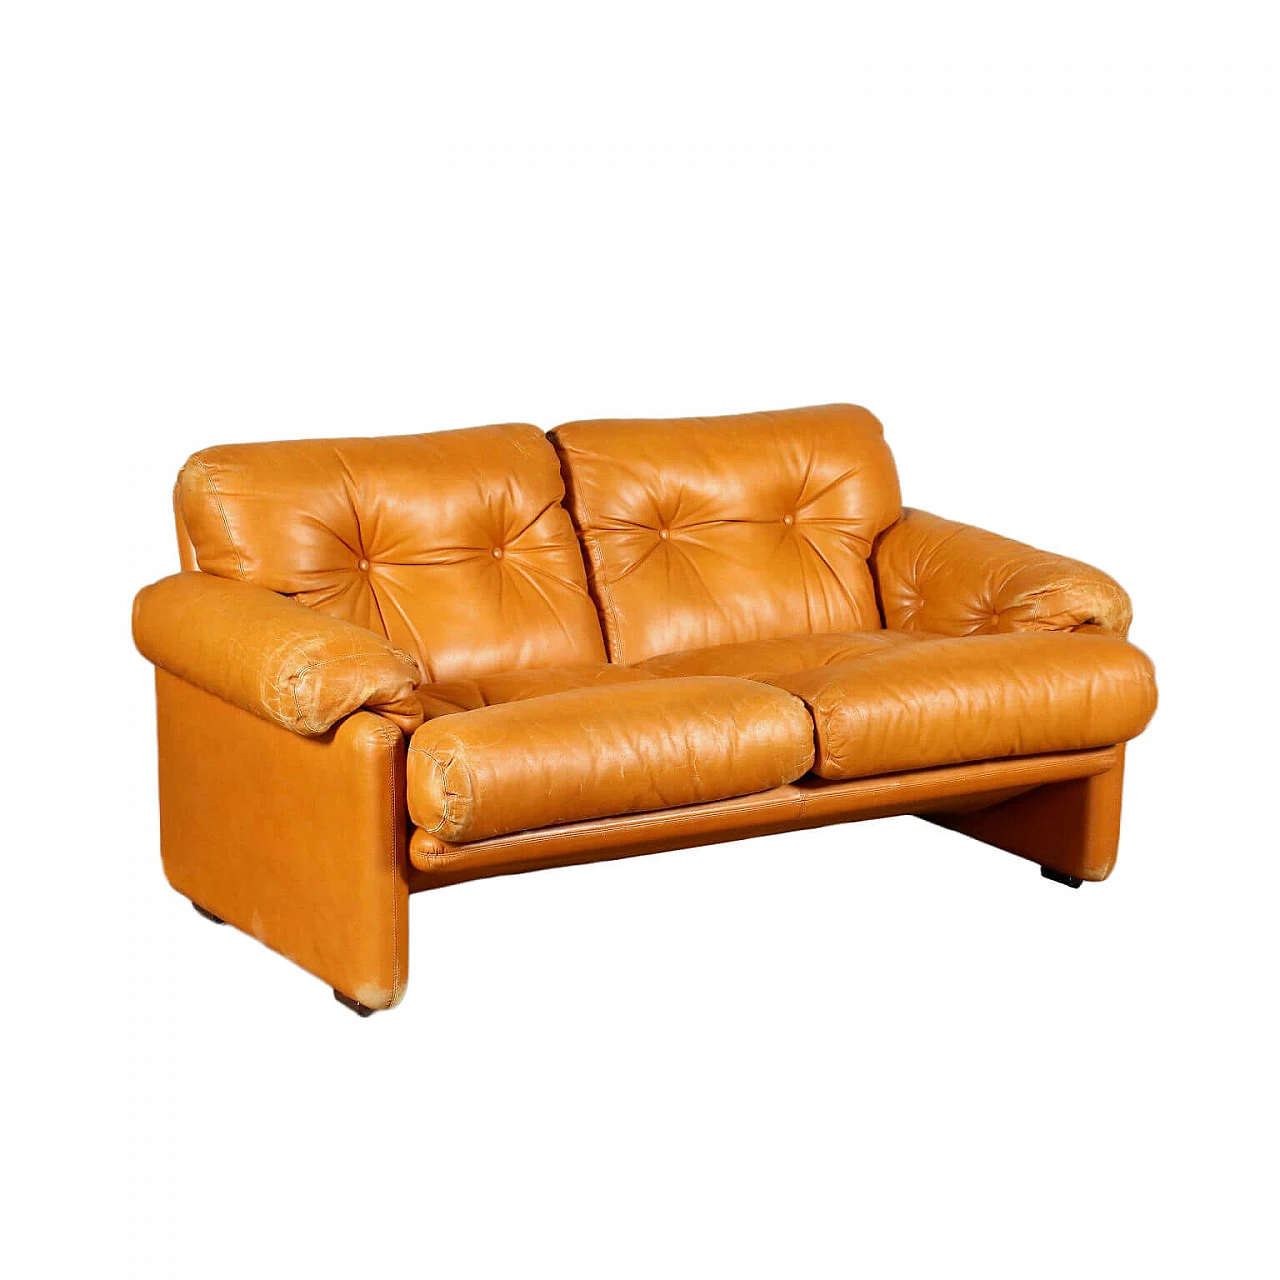 Coronado leather sofa by Tobia Scarpa for B&B, 70s 1212176